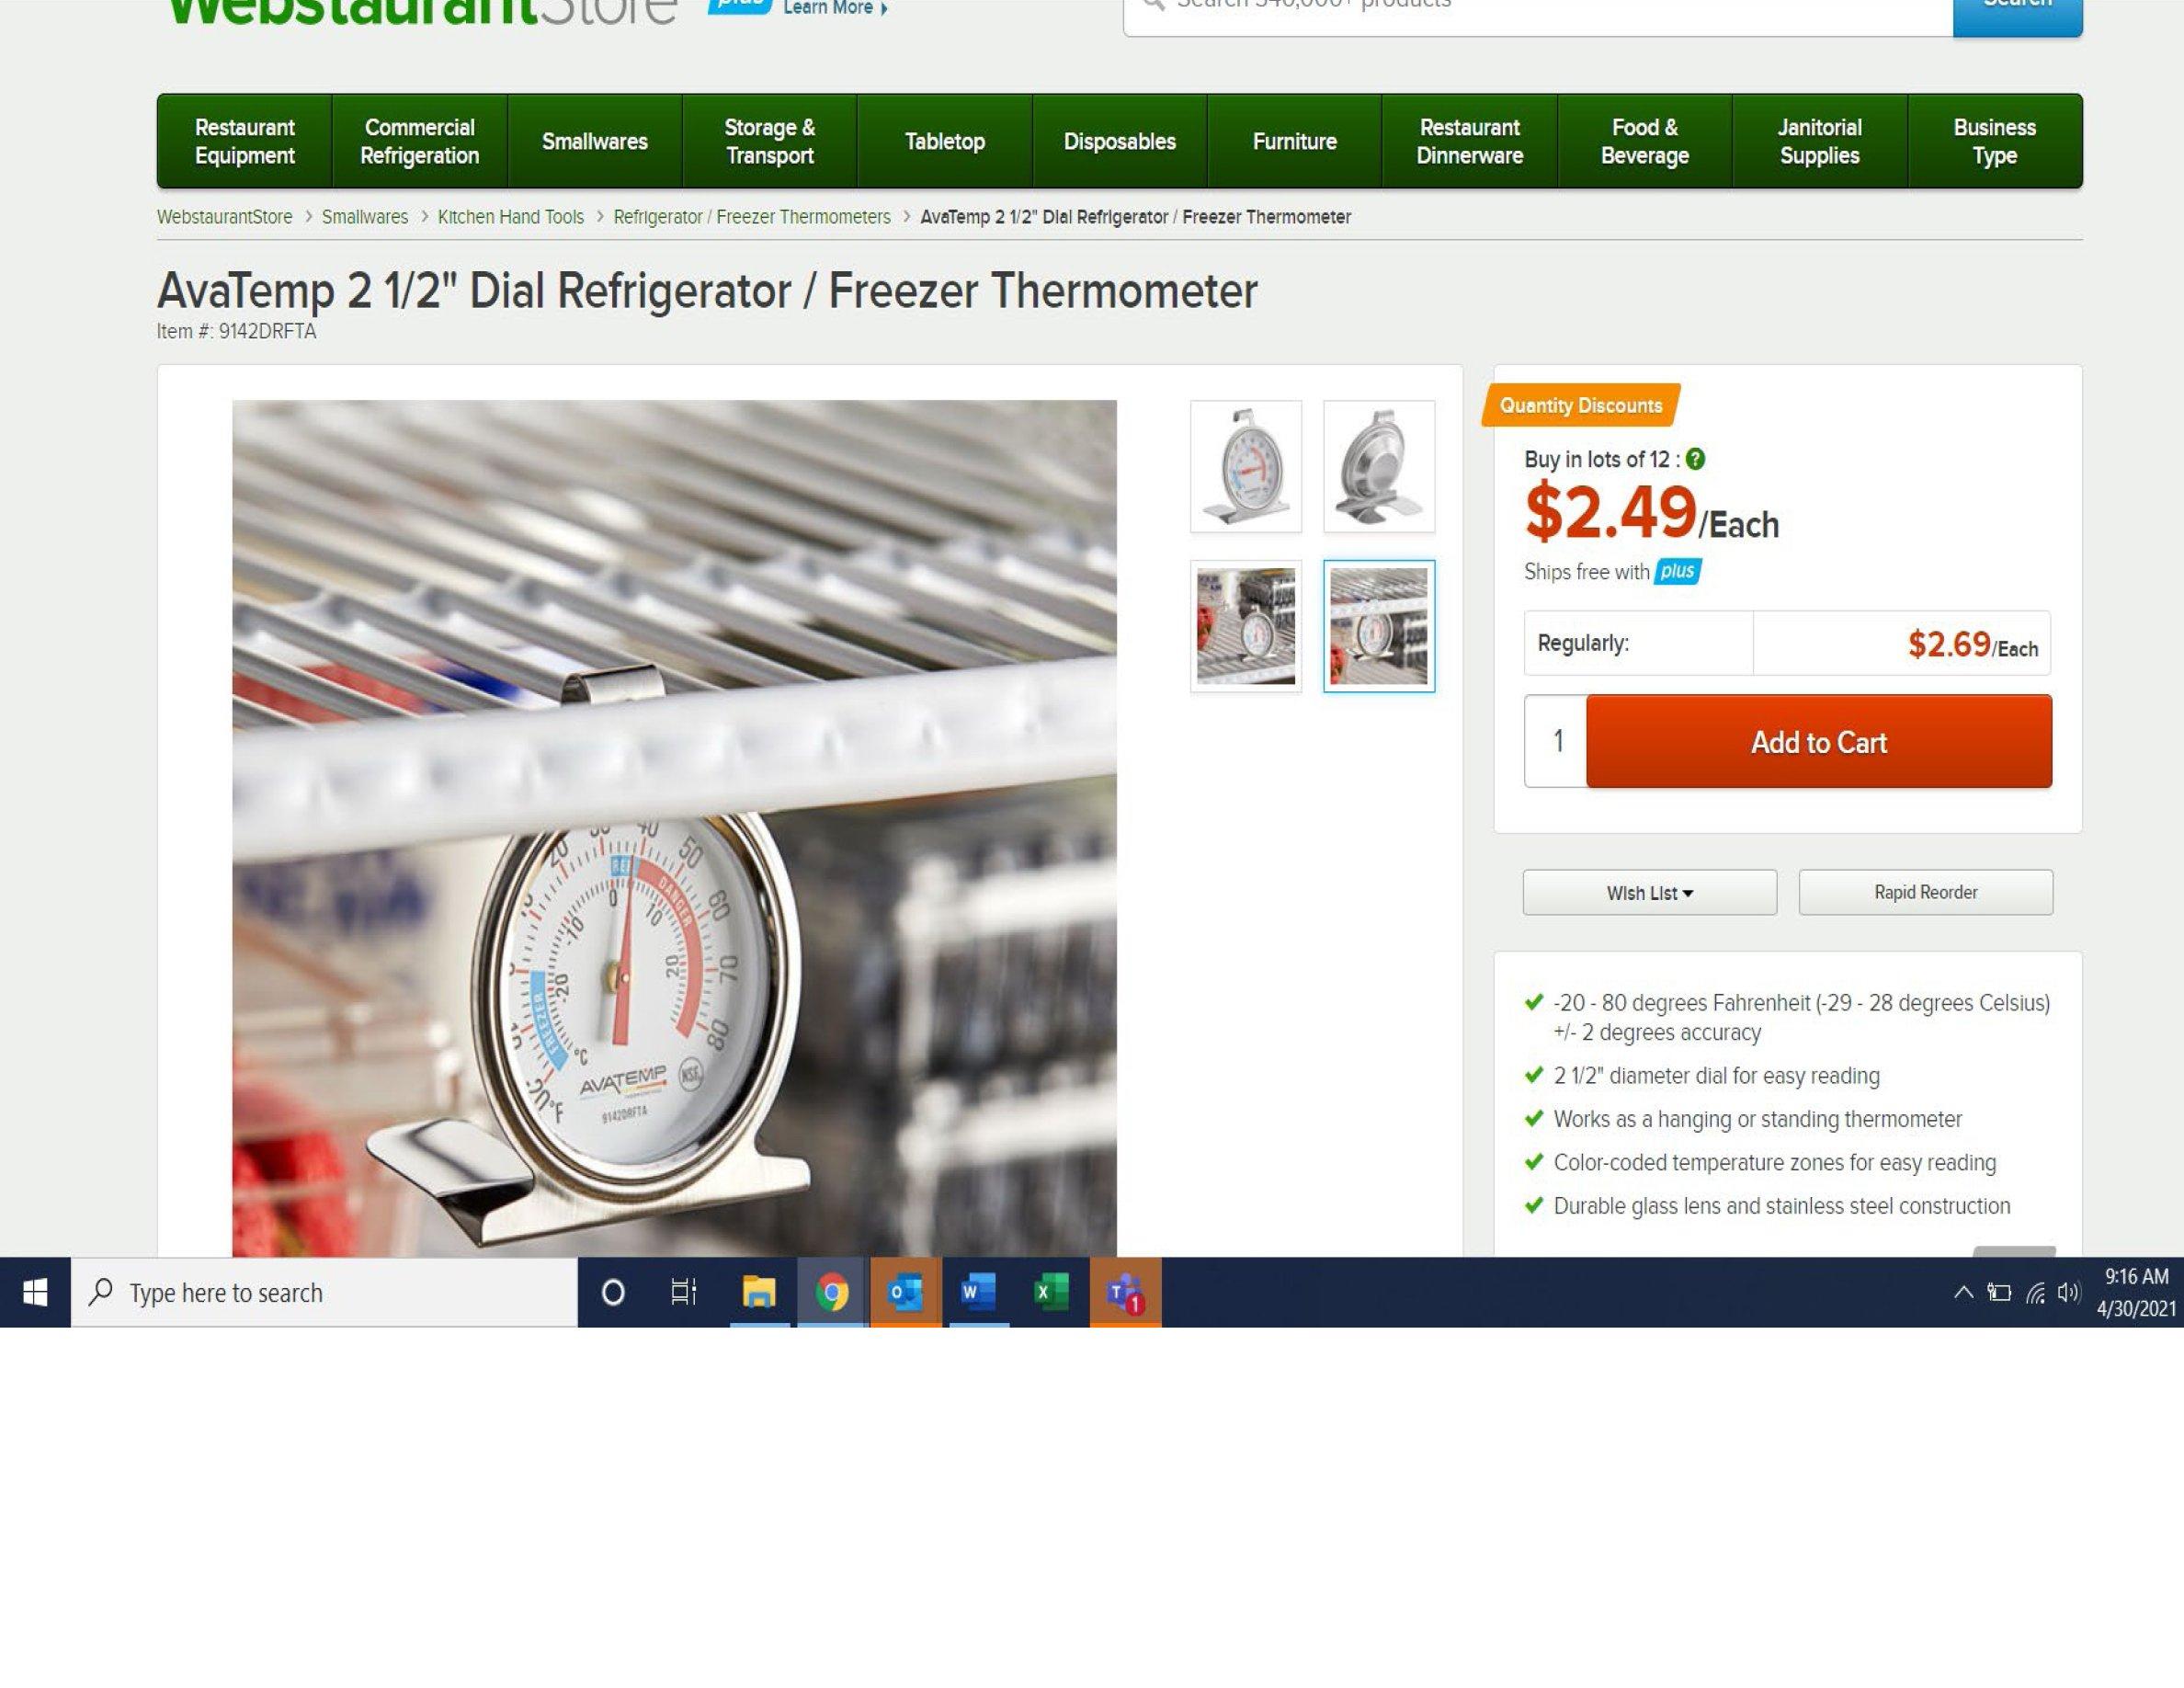 AvaTemp 2 1/2 Dial Refrigerator / Freezer Thermometer